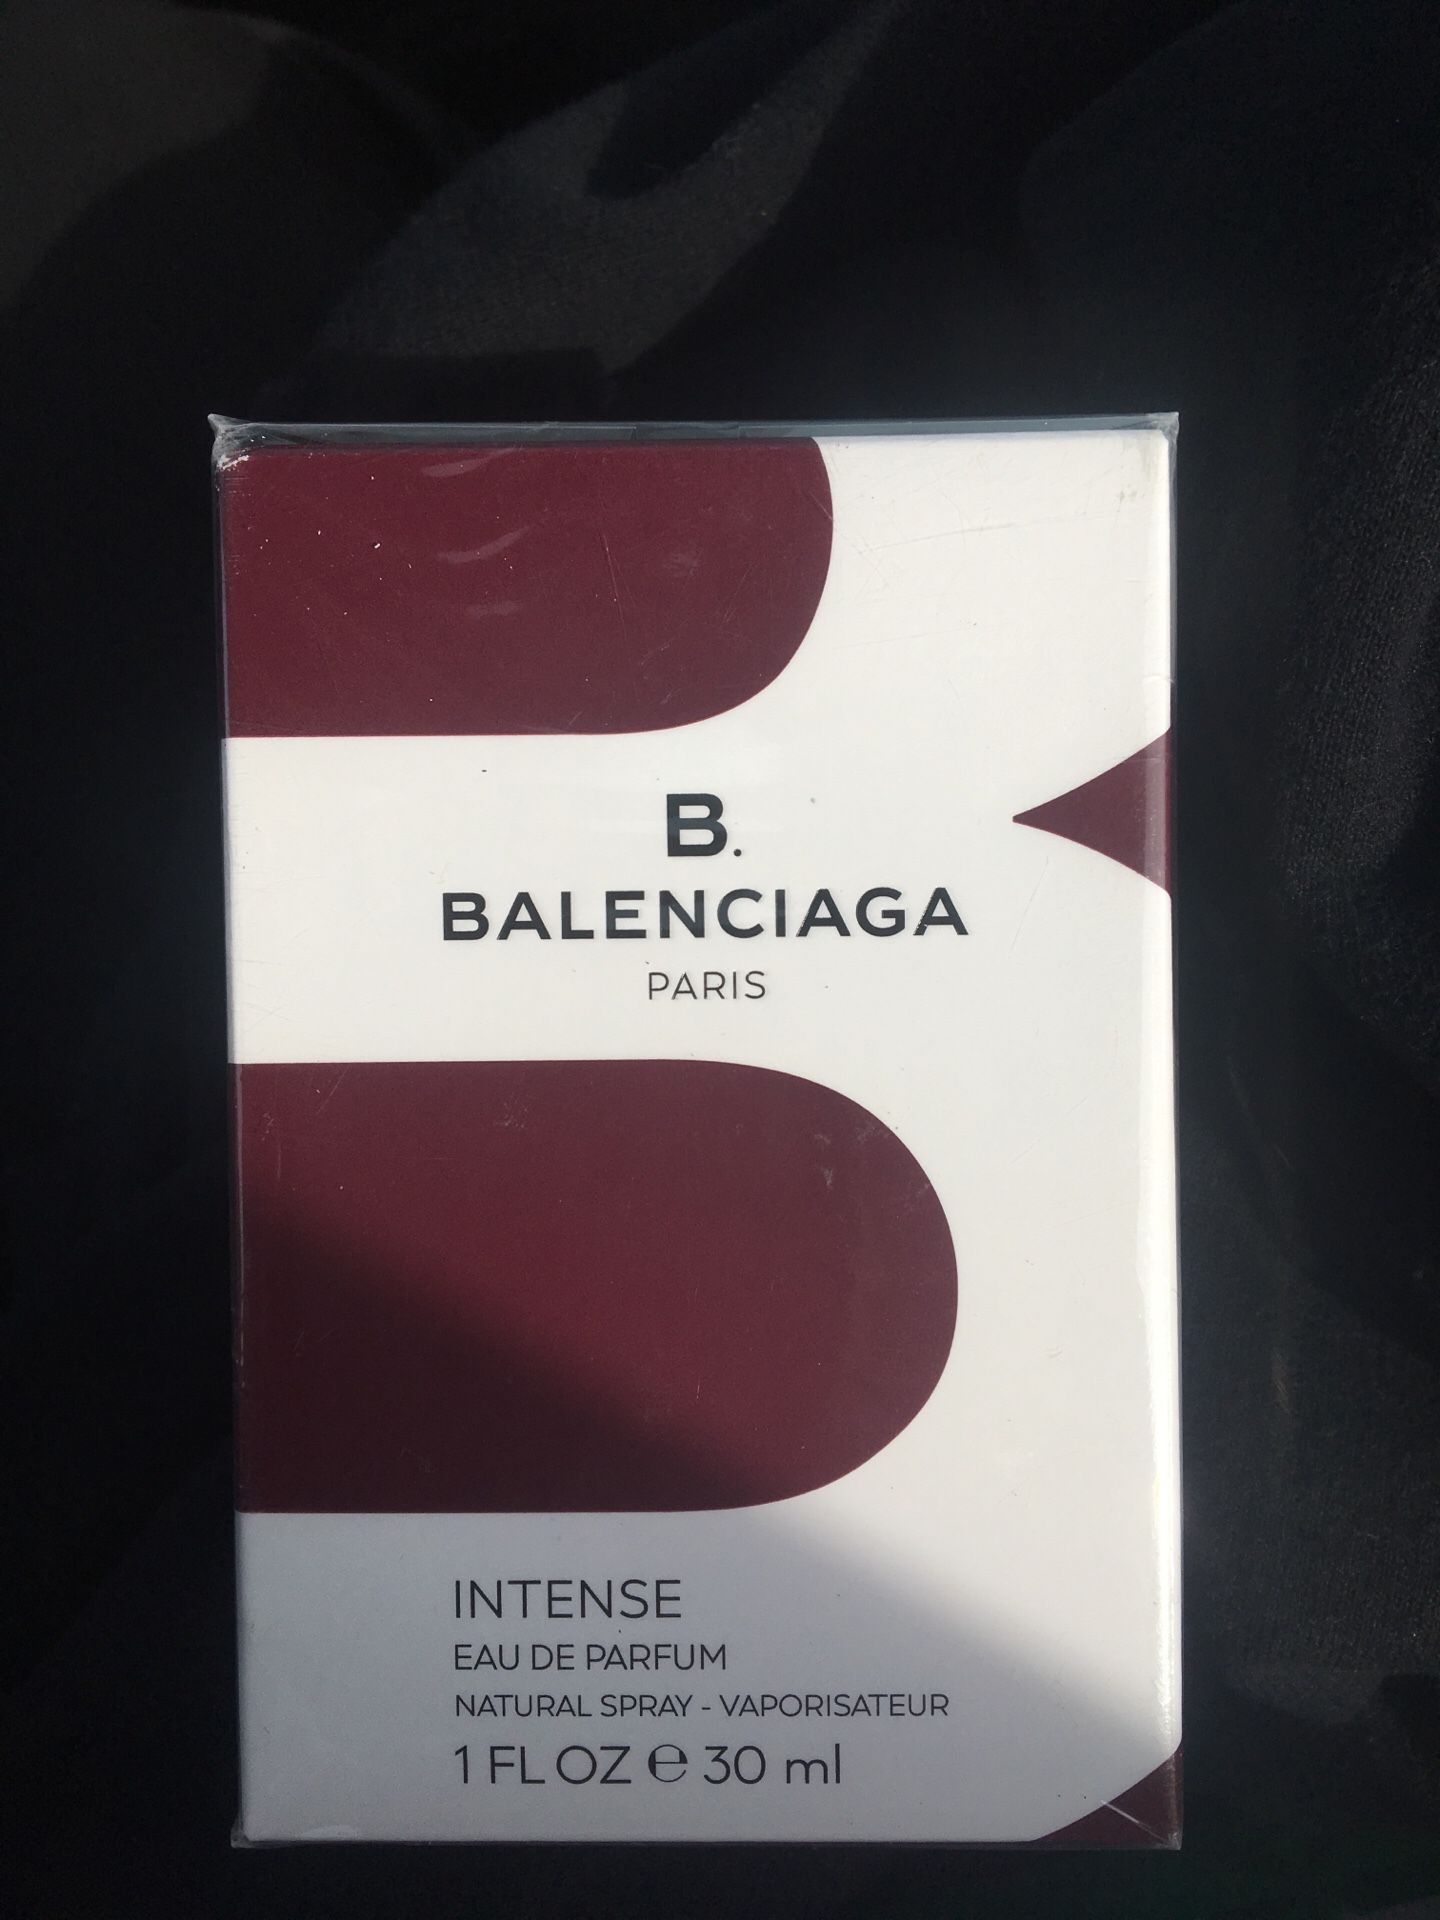 Balenciaga Paris intense perfume $85 in store asking $40